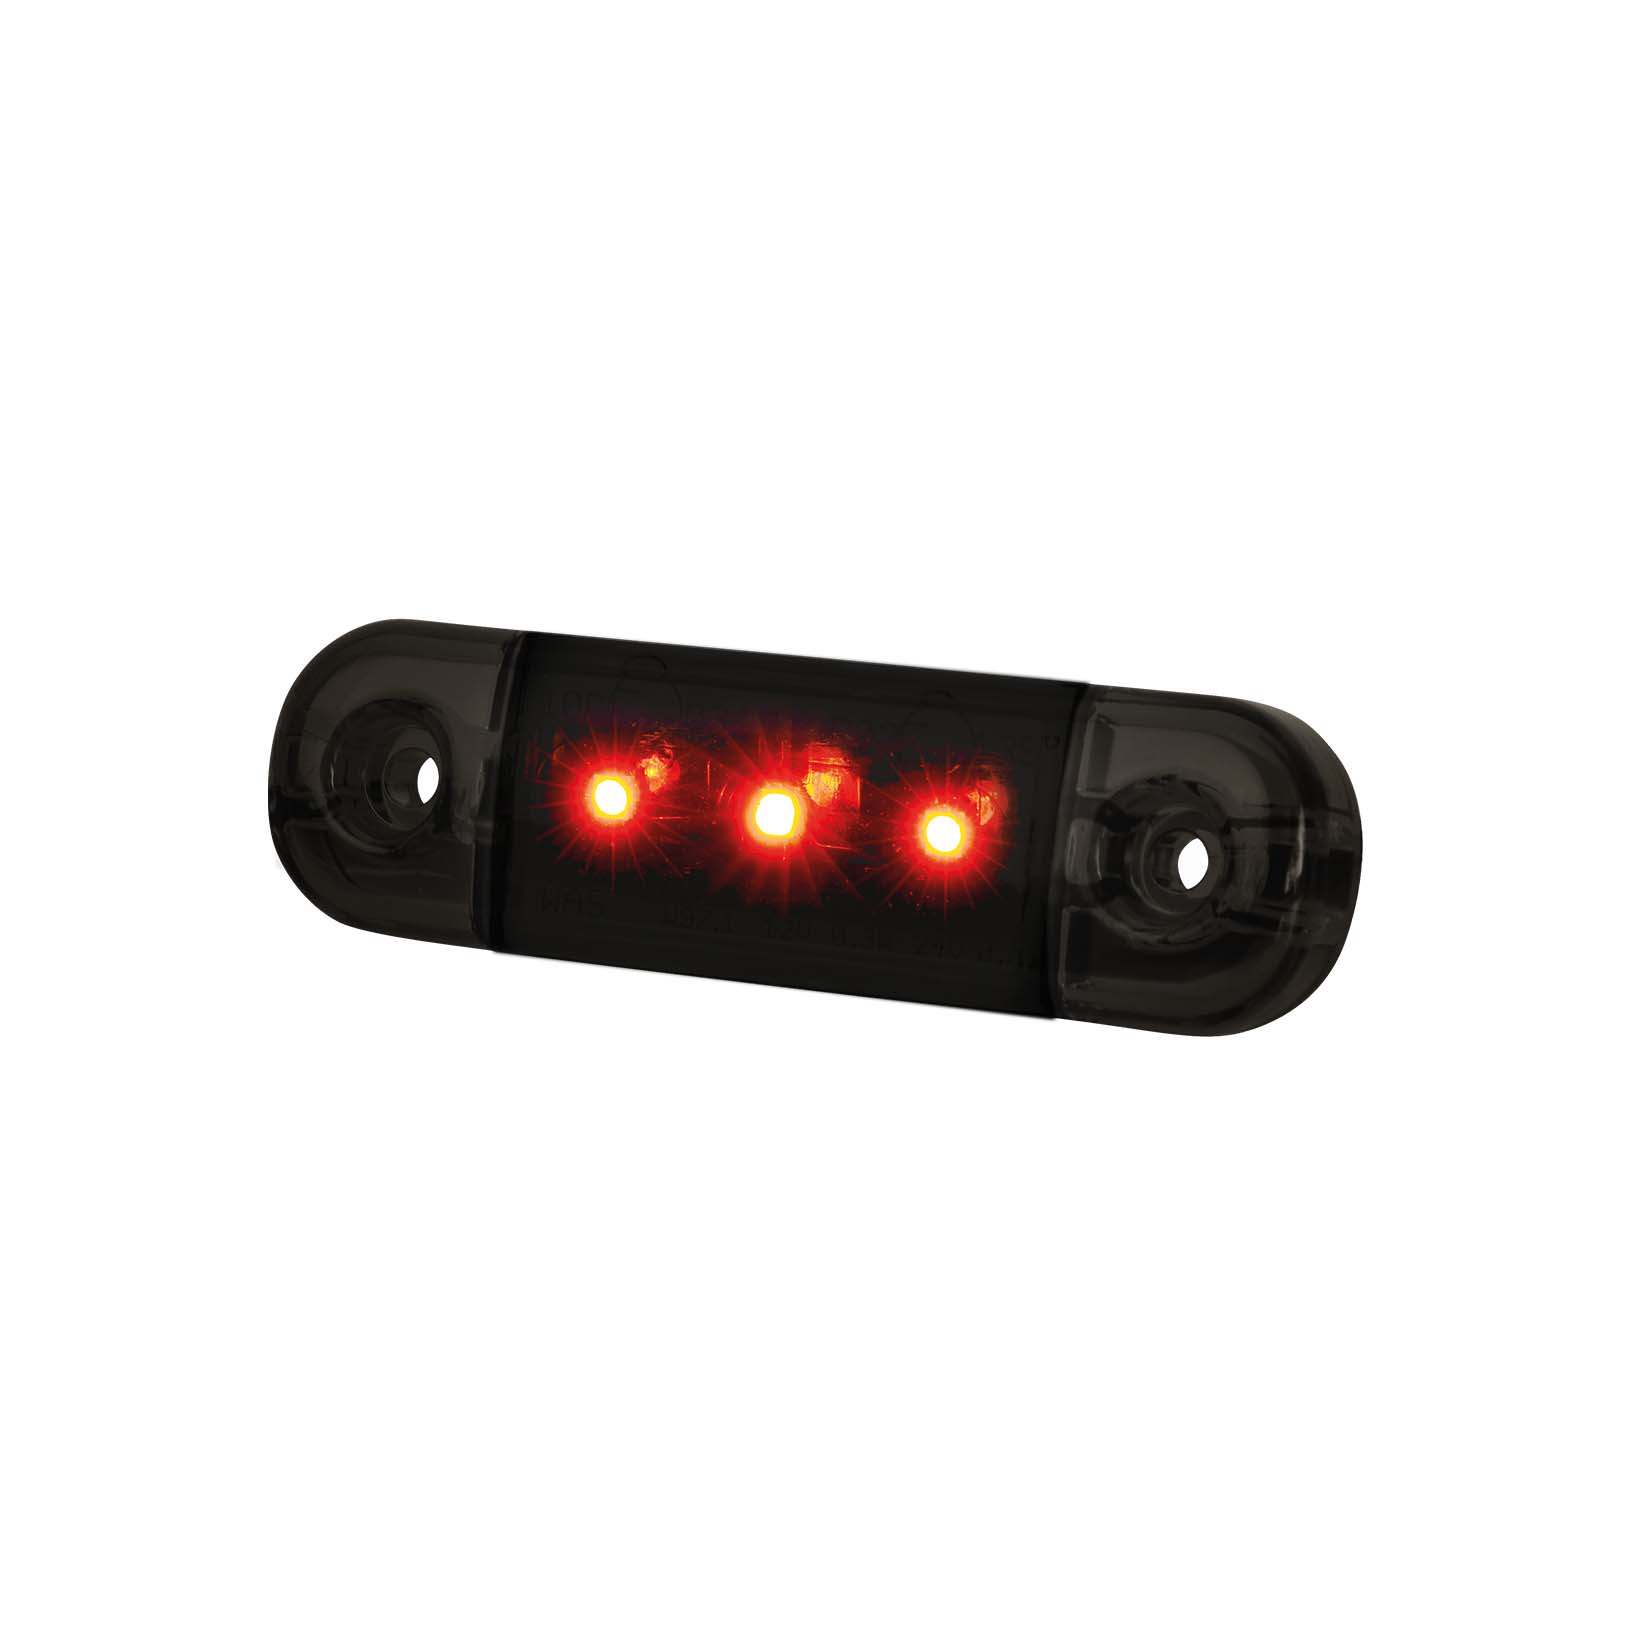 Strands Dark Knight Slim Marker Lights / 3 LED - spo-cs-disabled - spo-default - spo-enabled - spo-notify-me-disabled